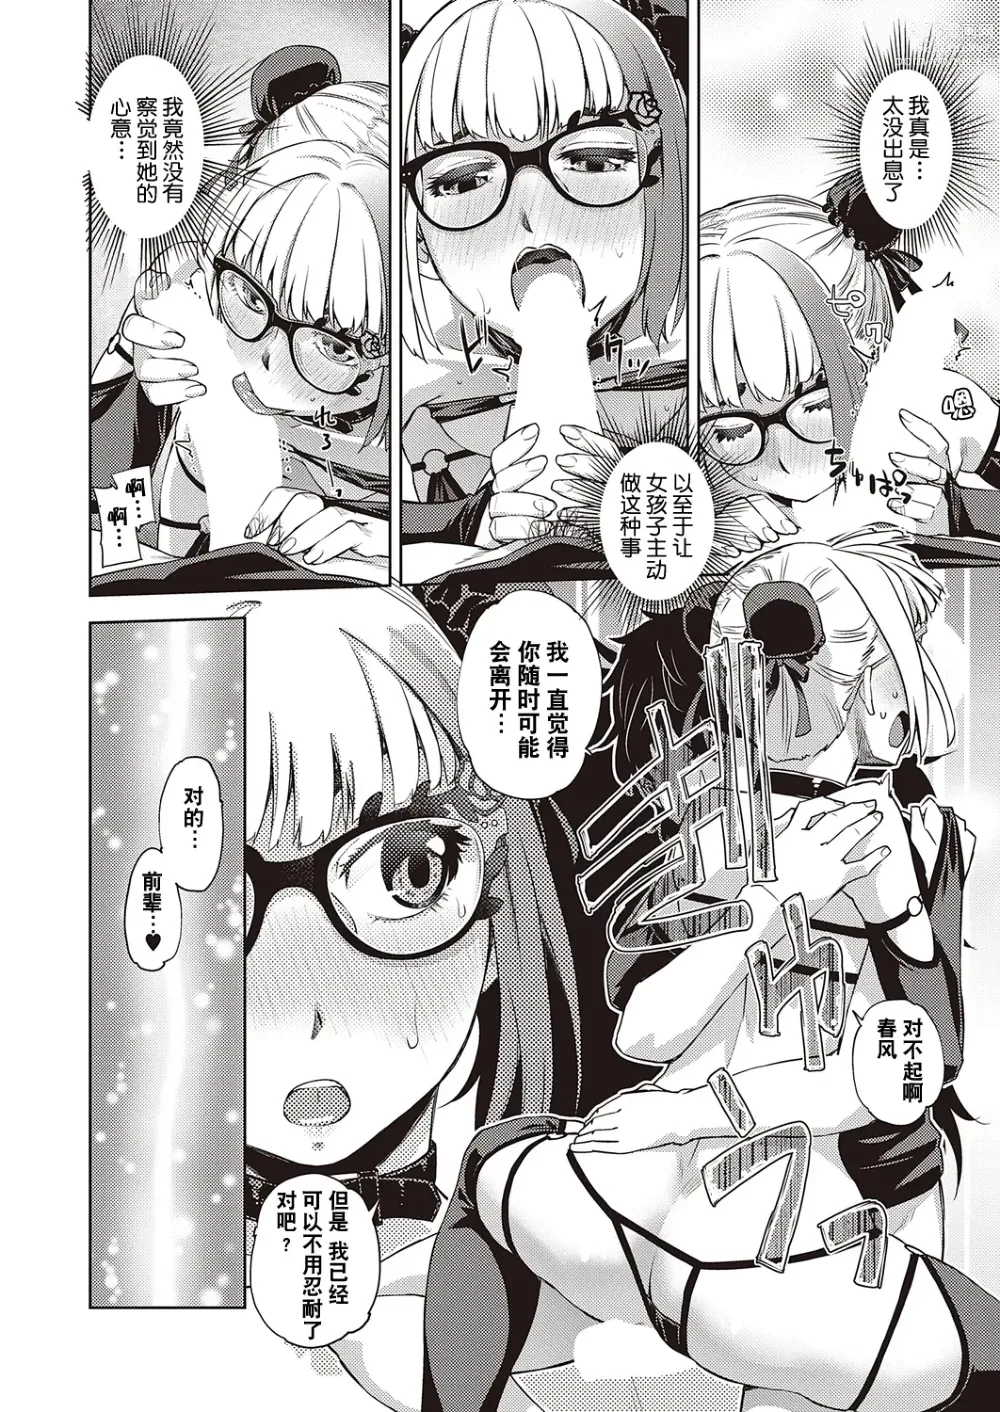 Page 14 of manga Houkago Megane Club